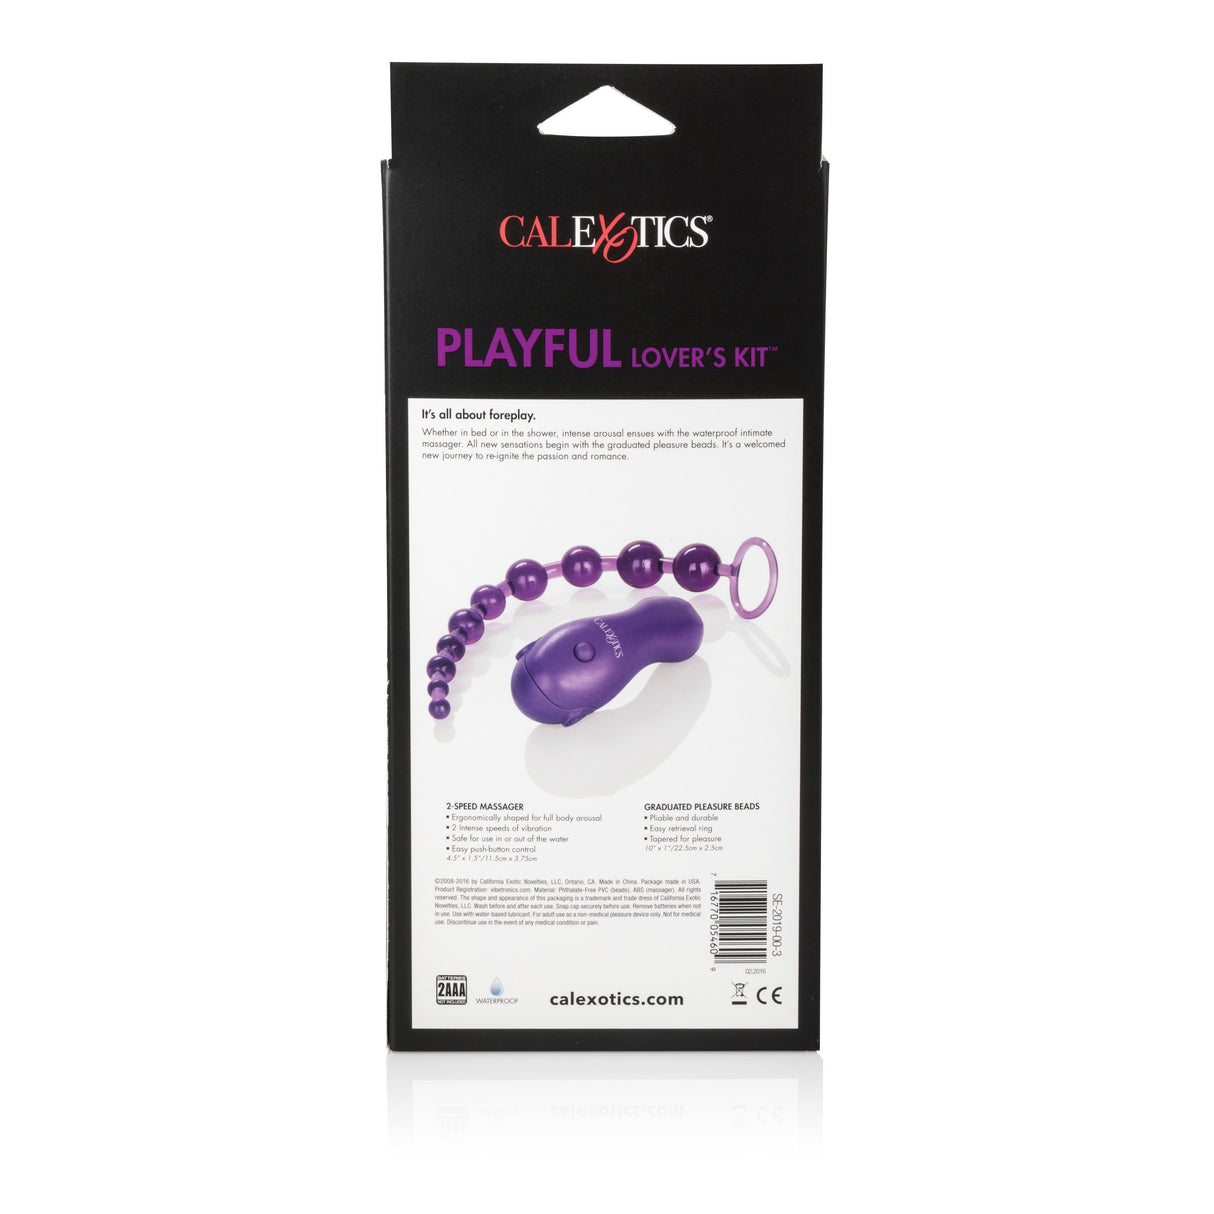 California Exotics - Starter Playful Lover's Kit (Purple) CE1400 CherryAffairs